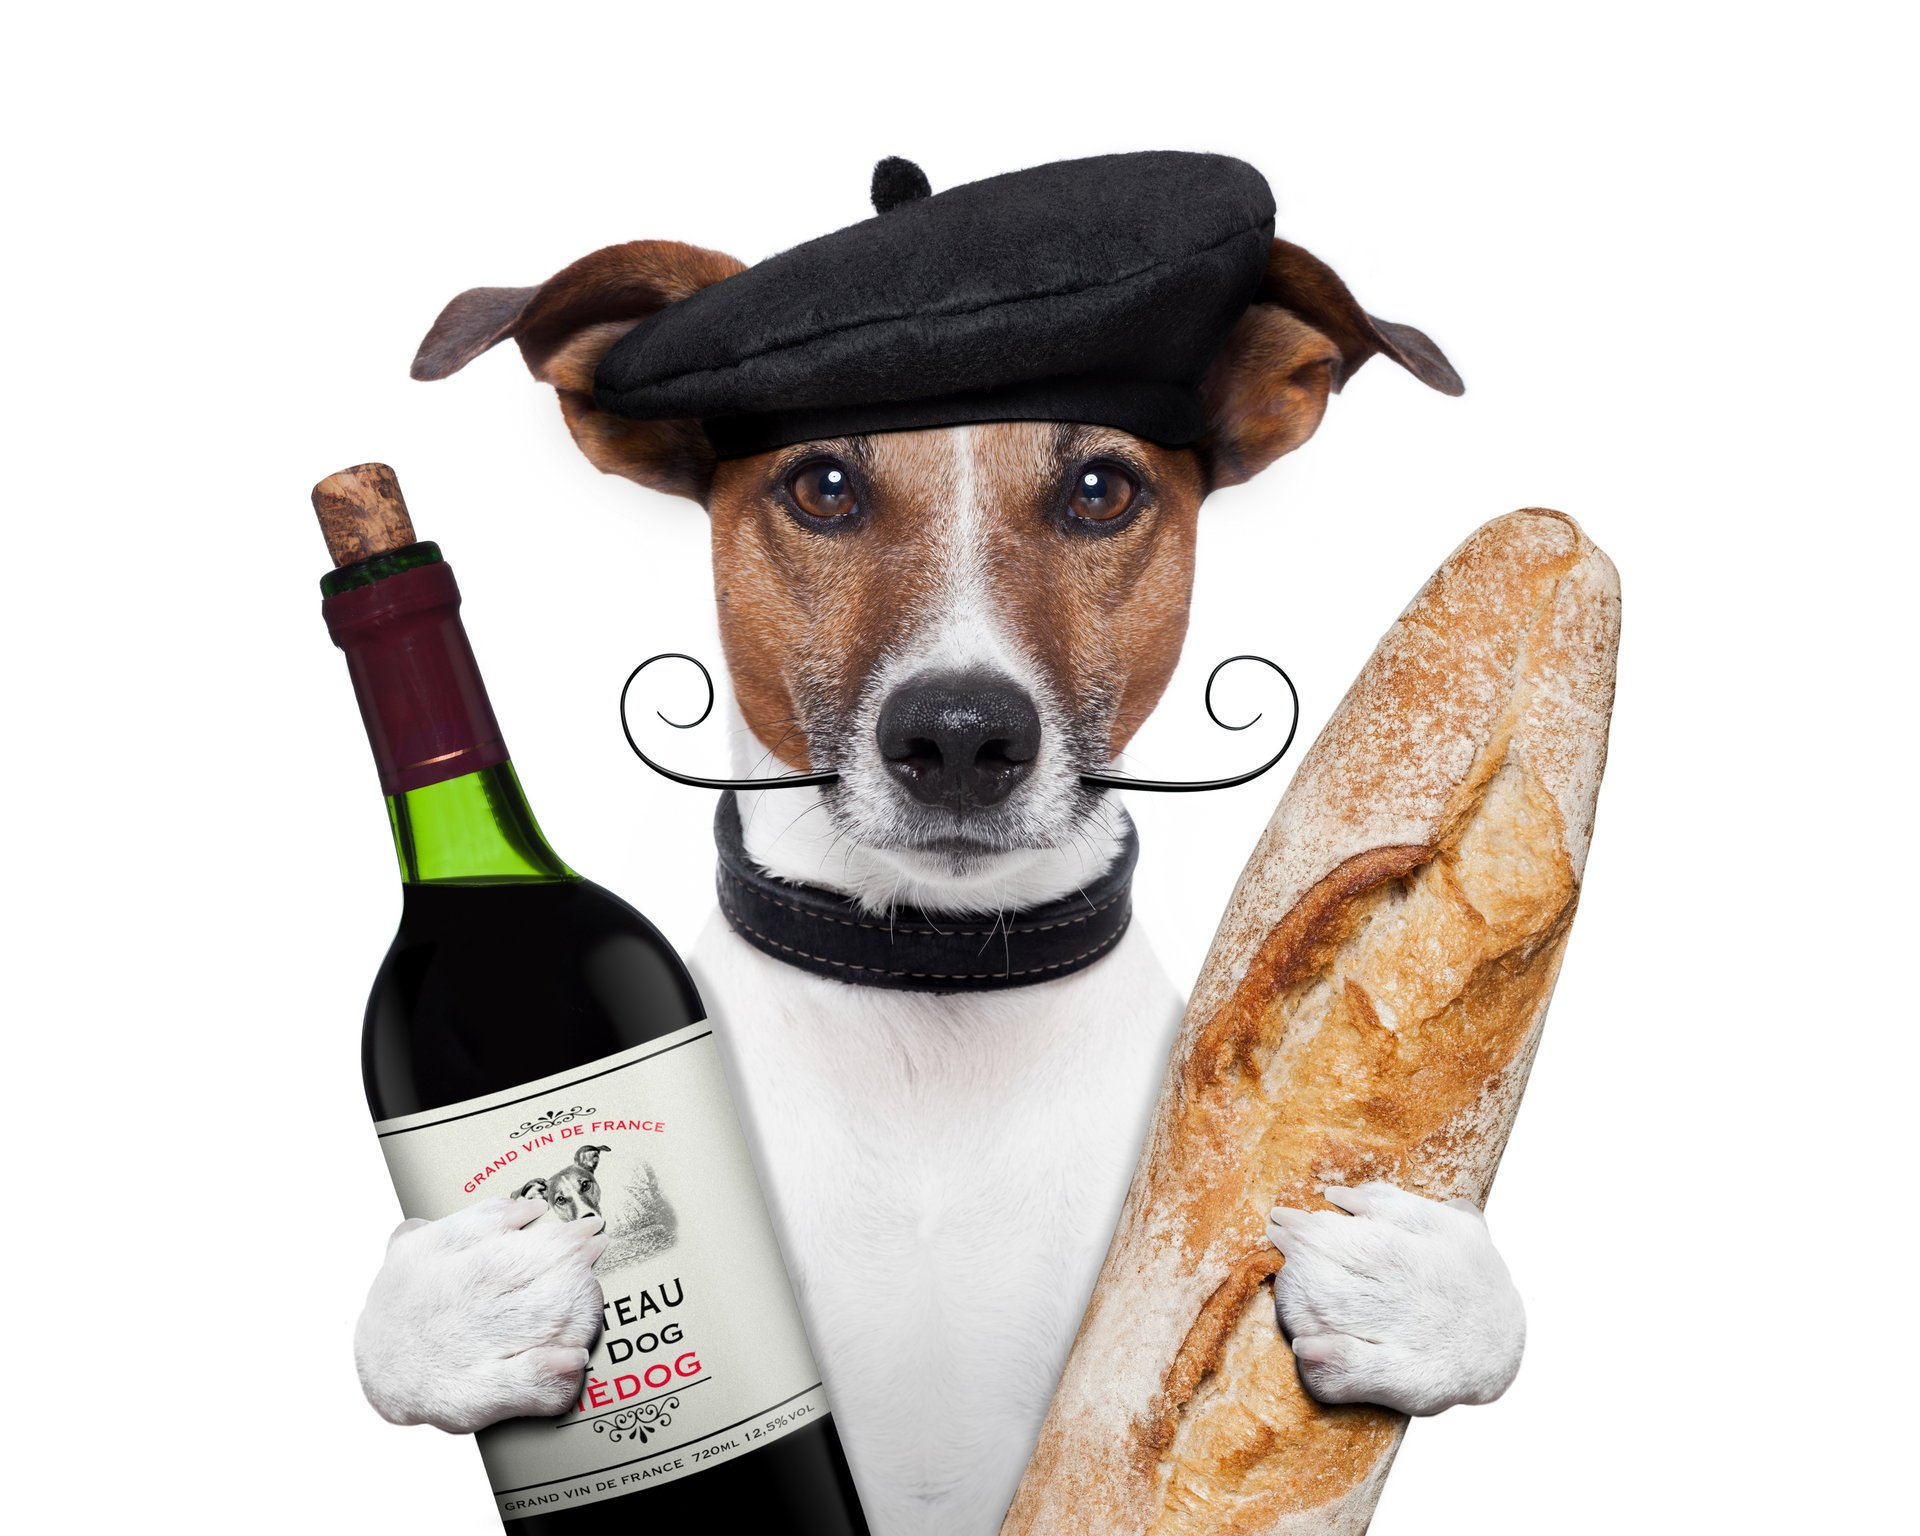 джек-рассел-терьер собака кепка усы вино хлеб бутылка батон лапы белый фон юмор